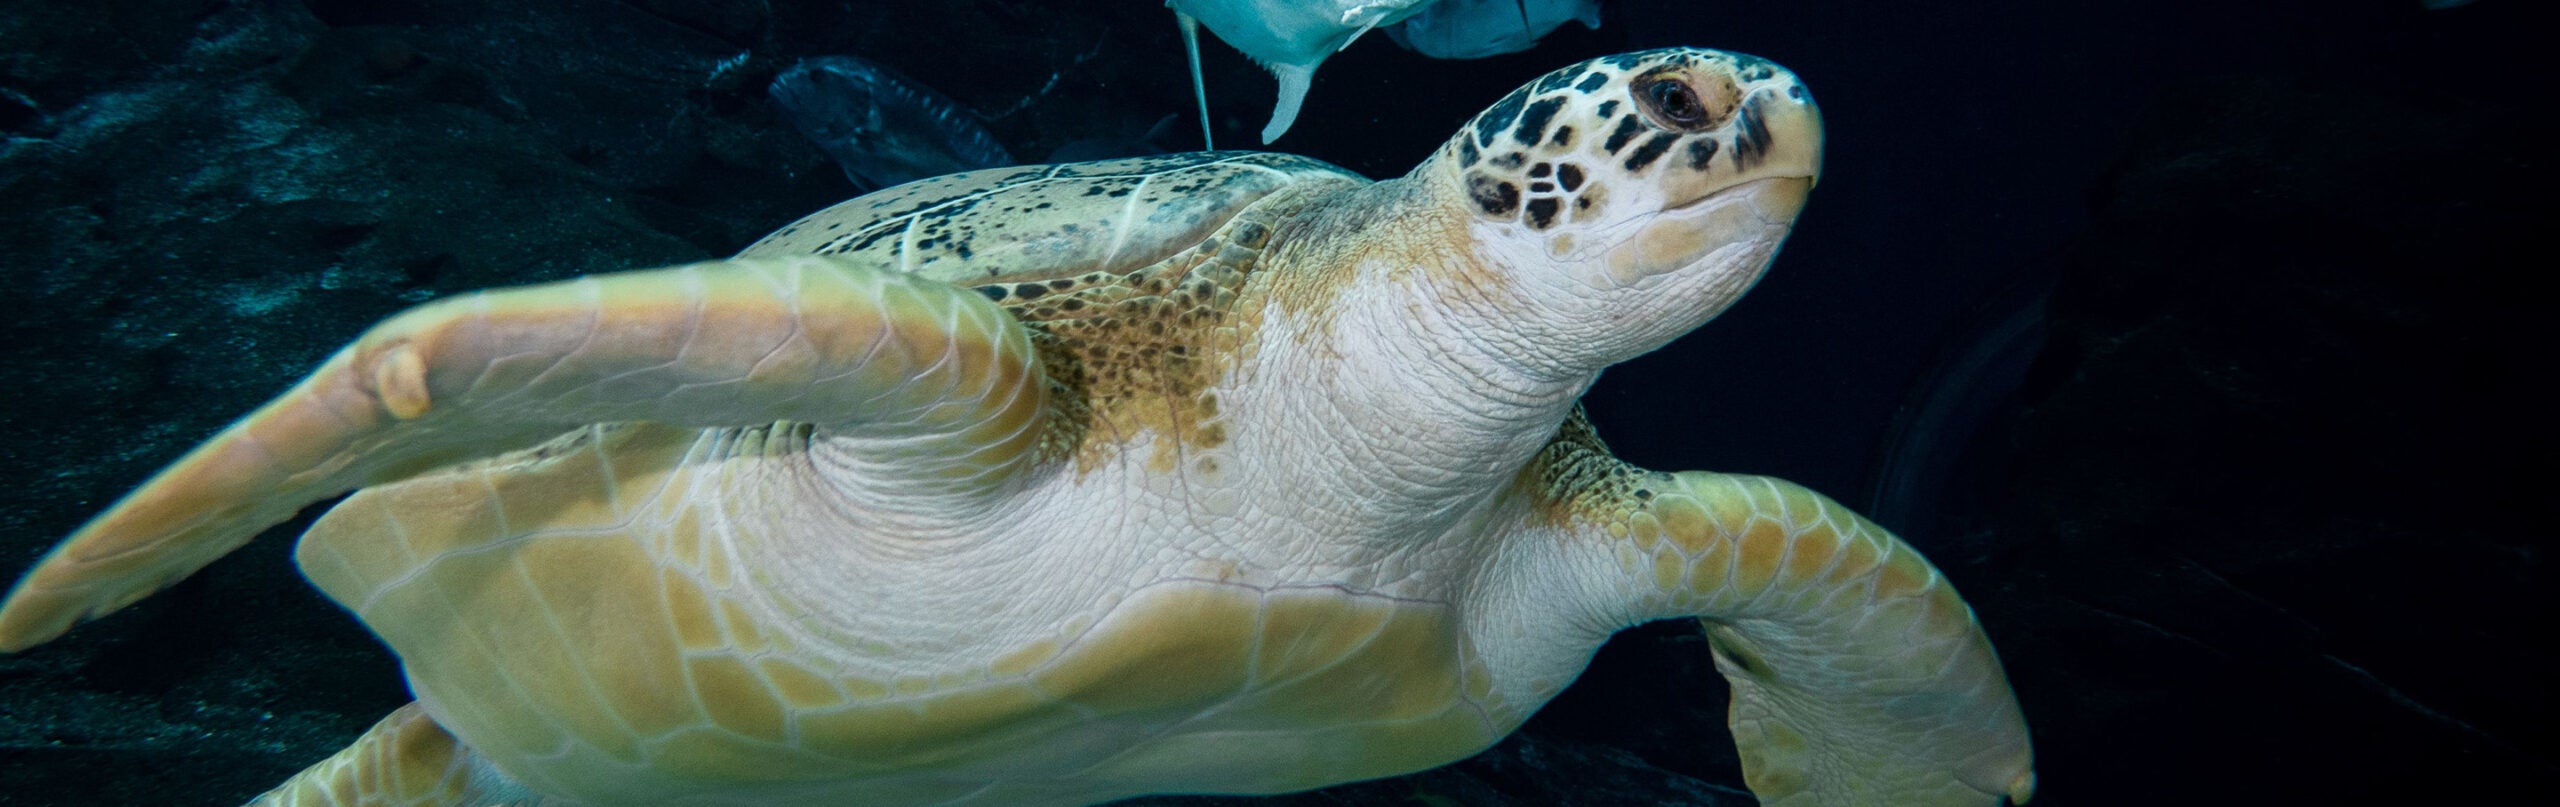 https://www.georgiaaquarium.org/wp-content/uploads/2018/09/green-sea-turtle-6-scaled.jpg